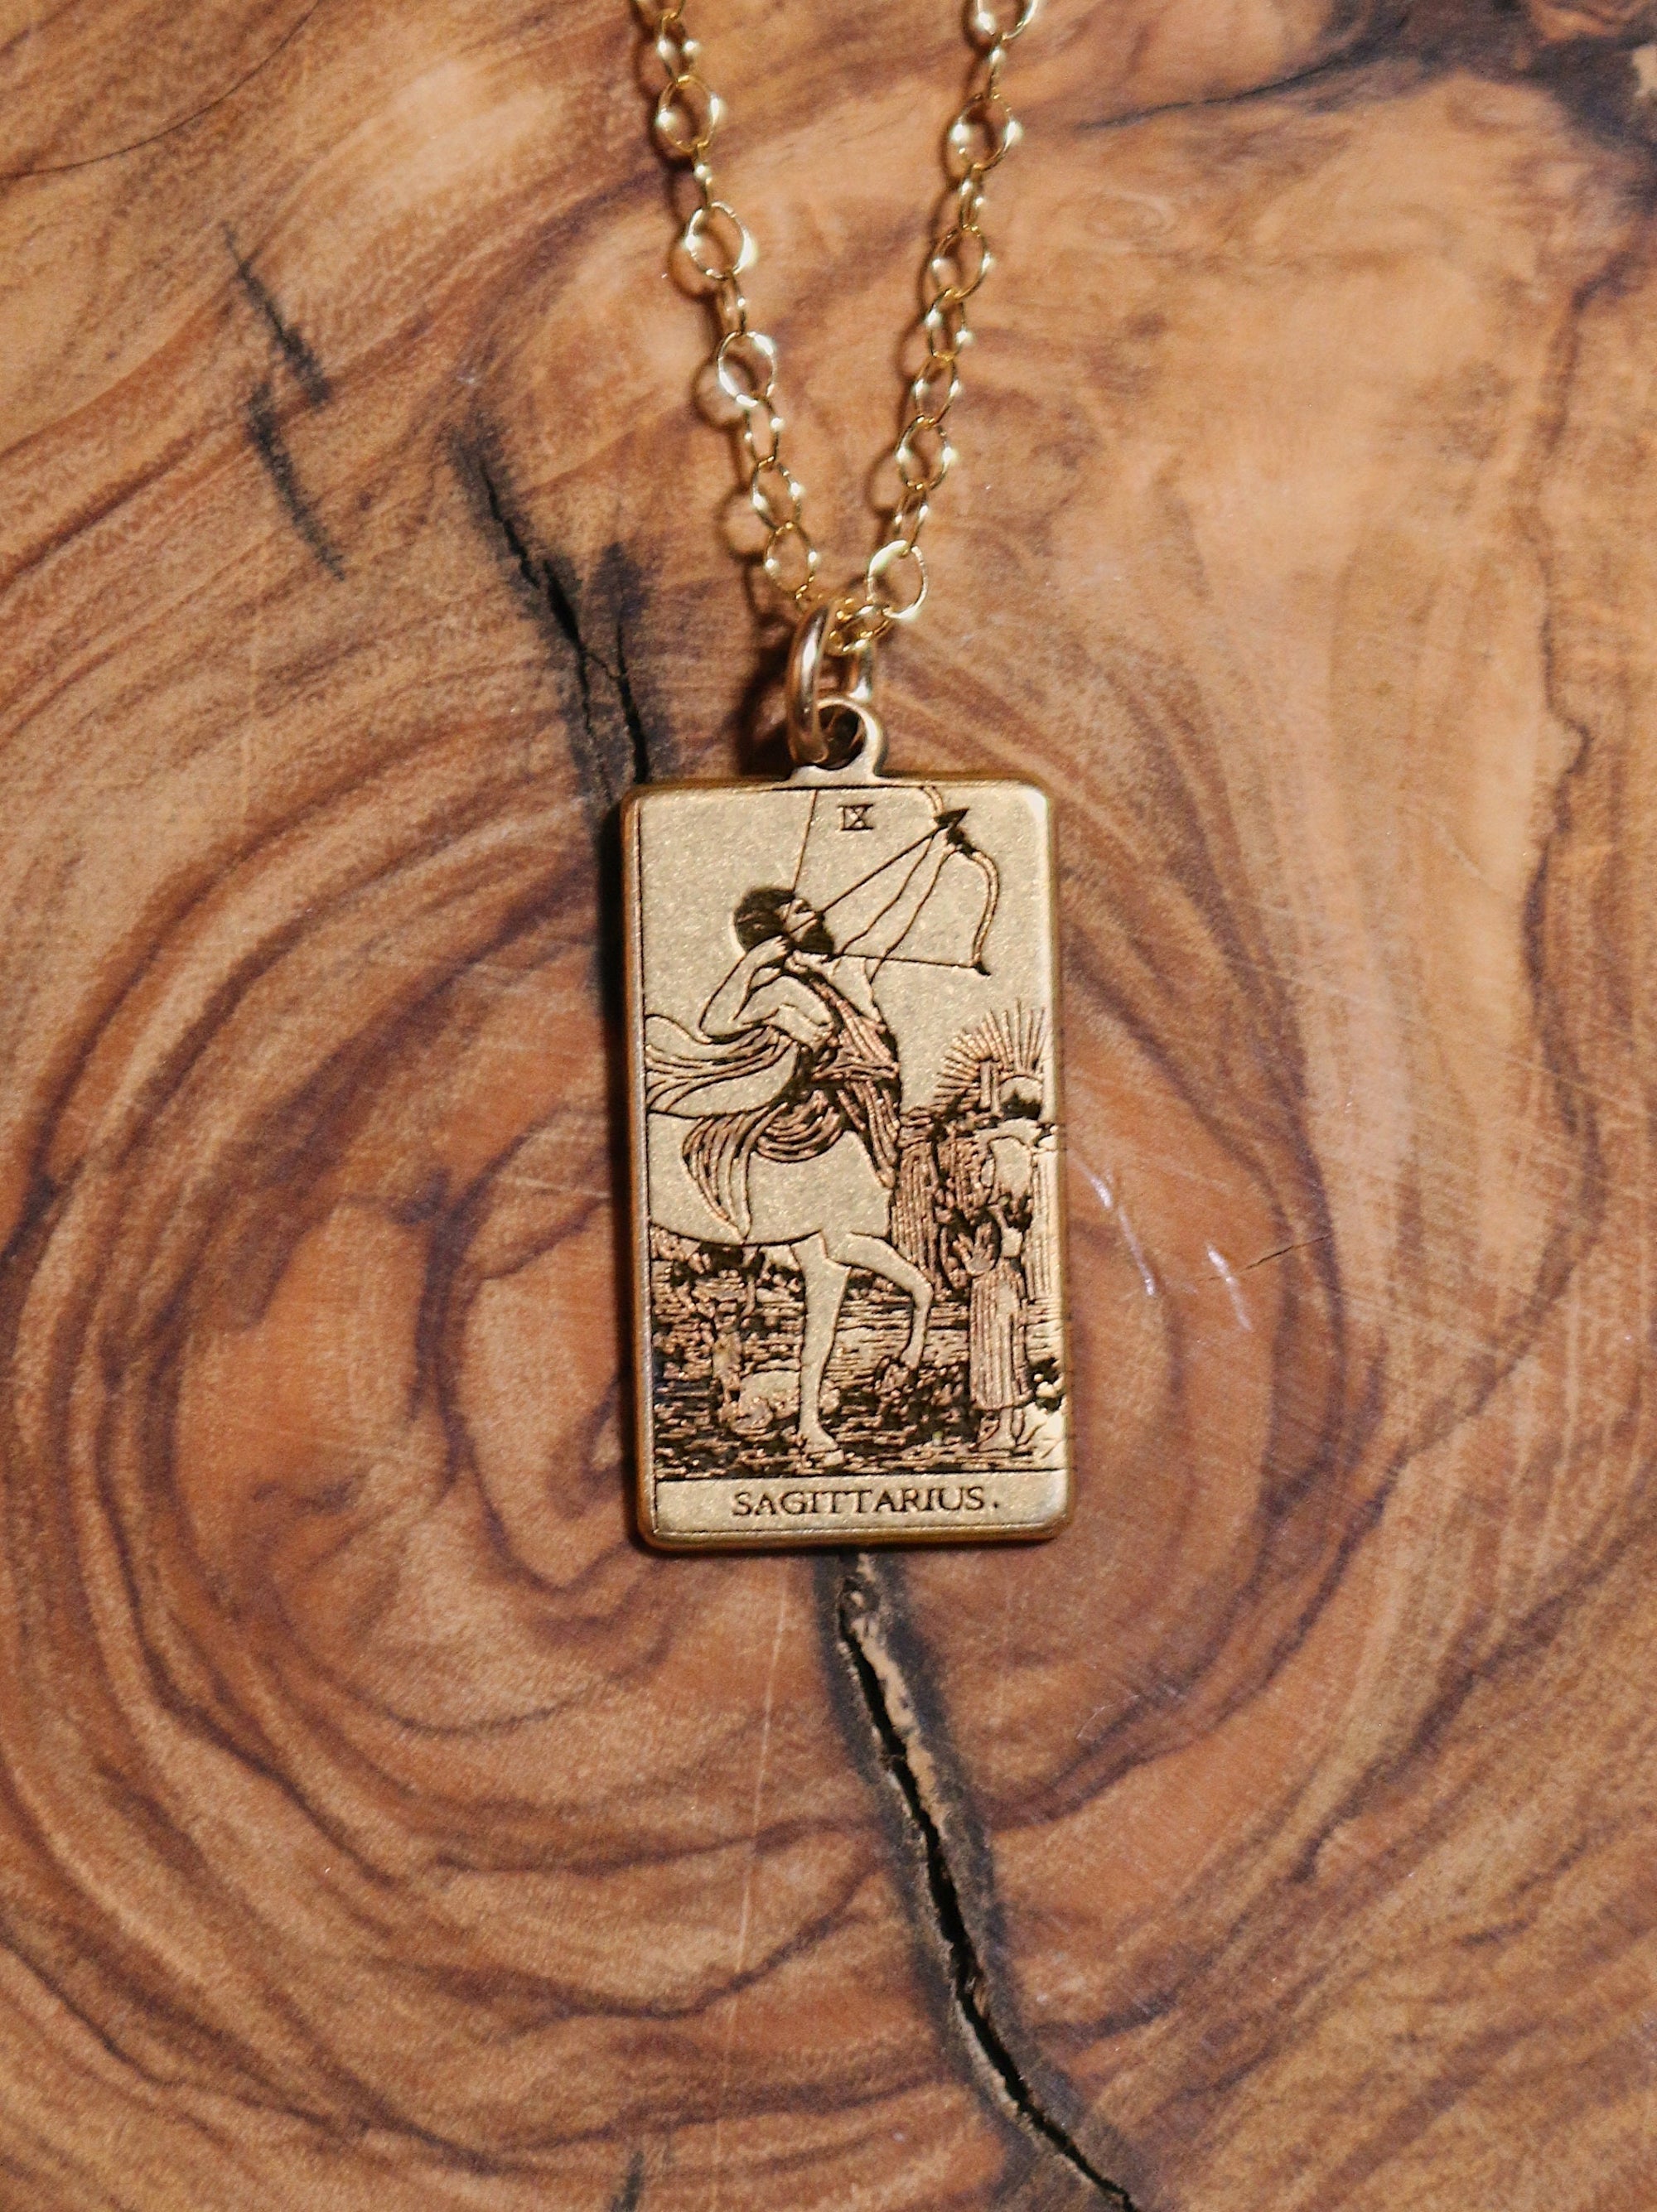 Sagittarius Death Tarot Card Inspired Zodiac Necklace - Gold Filled